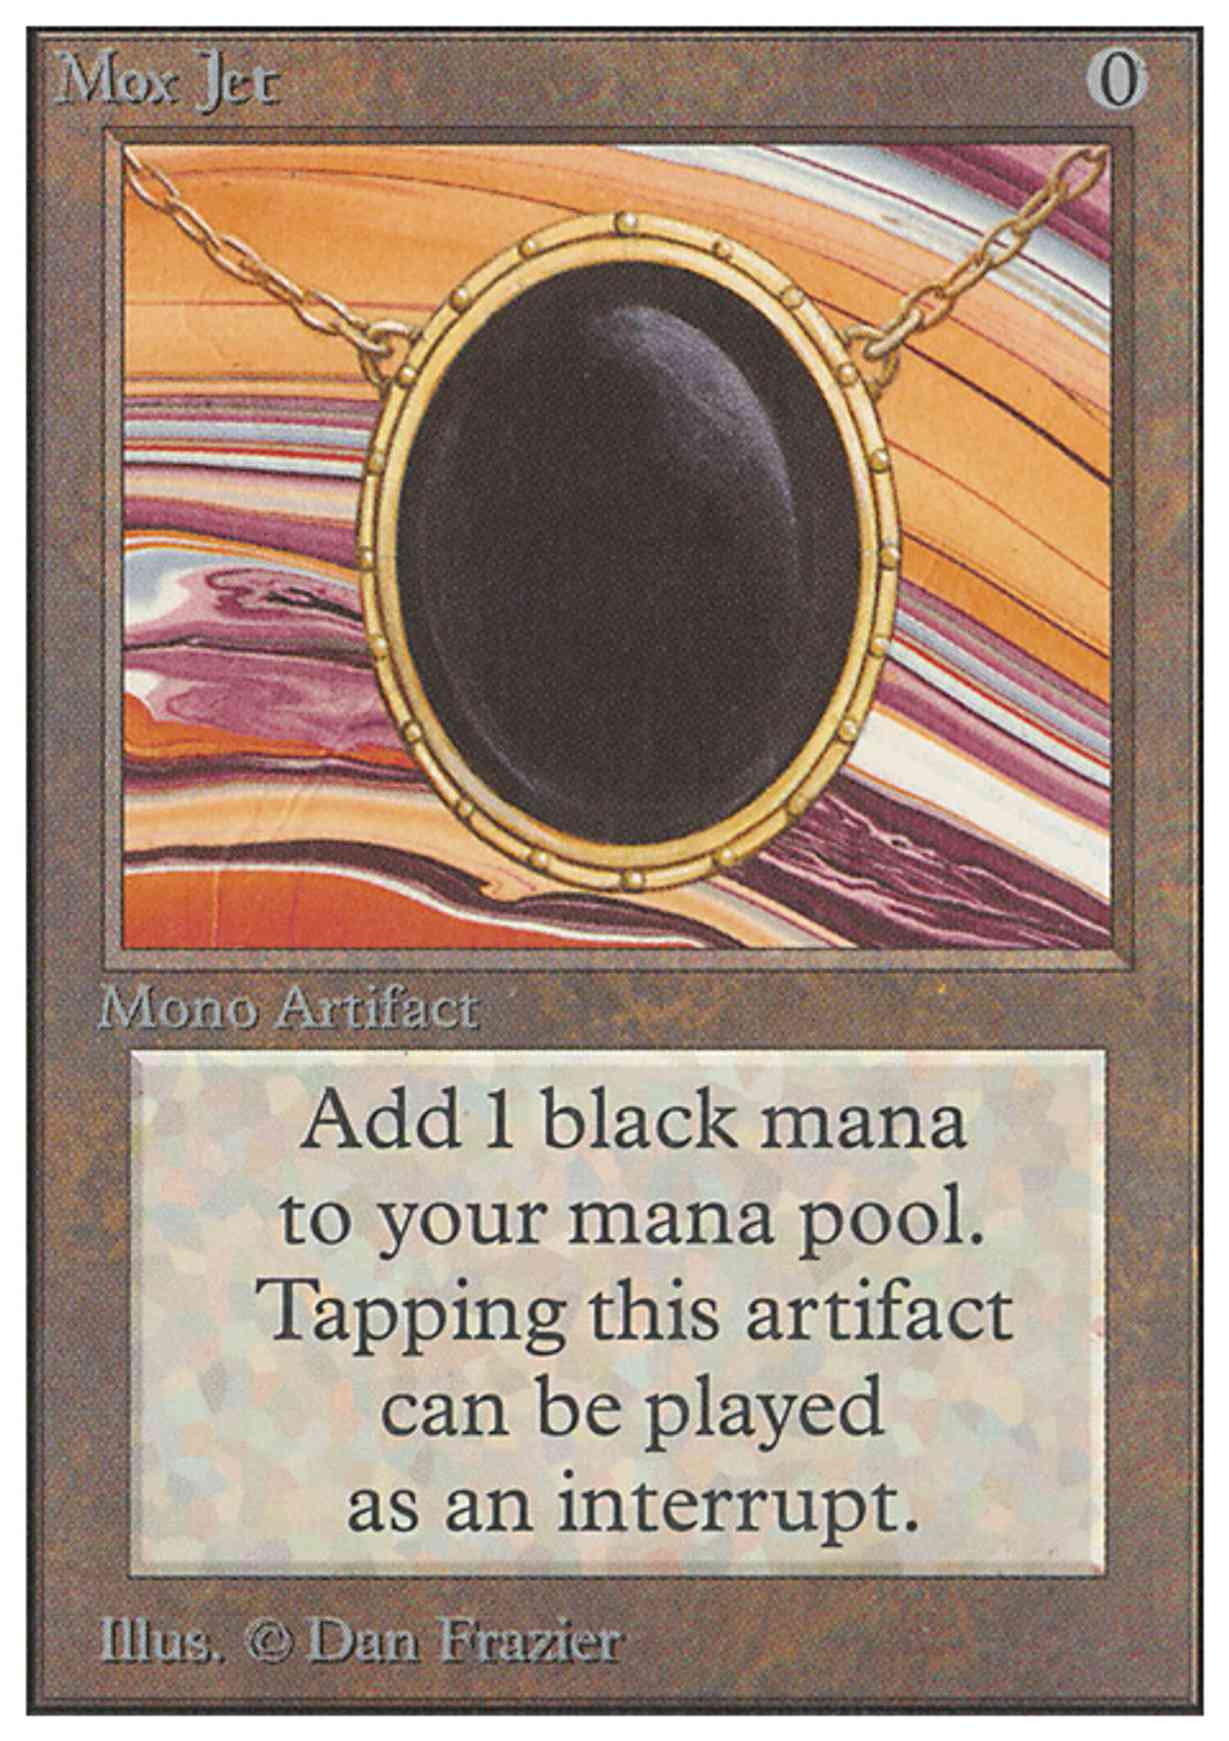 Mox Jet magic card front